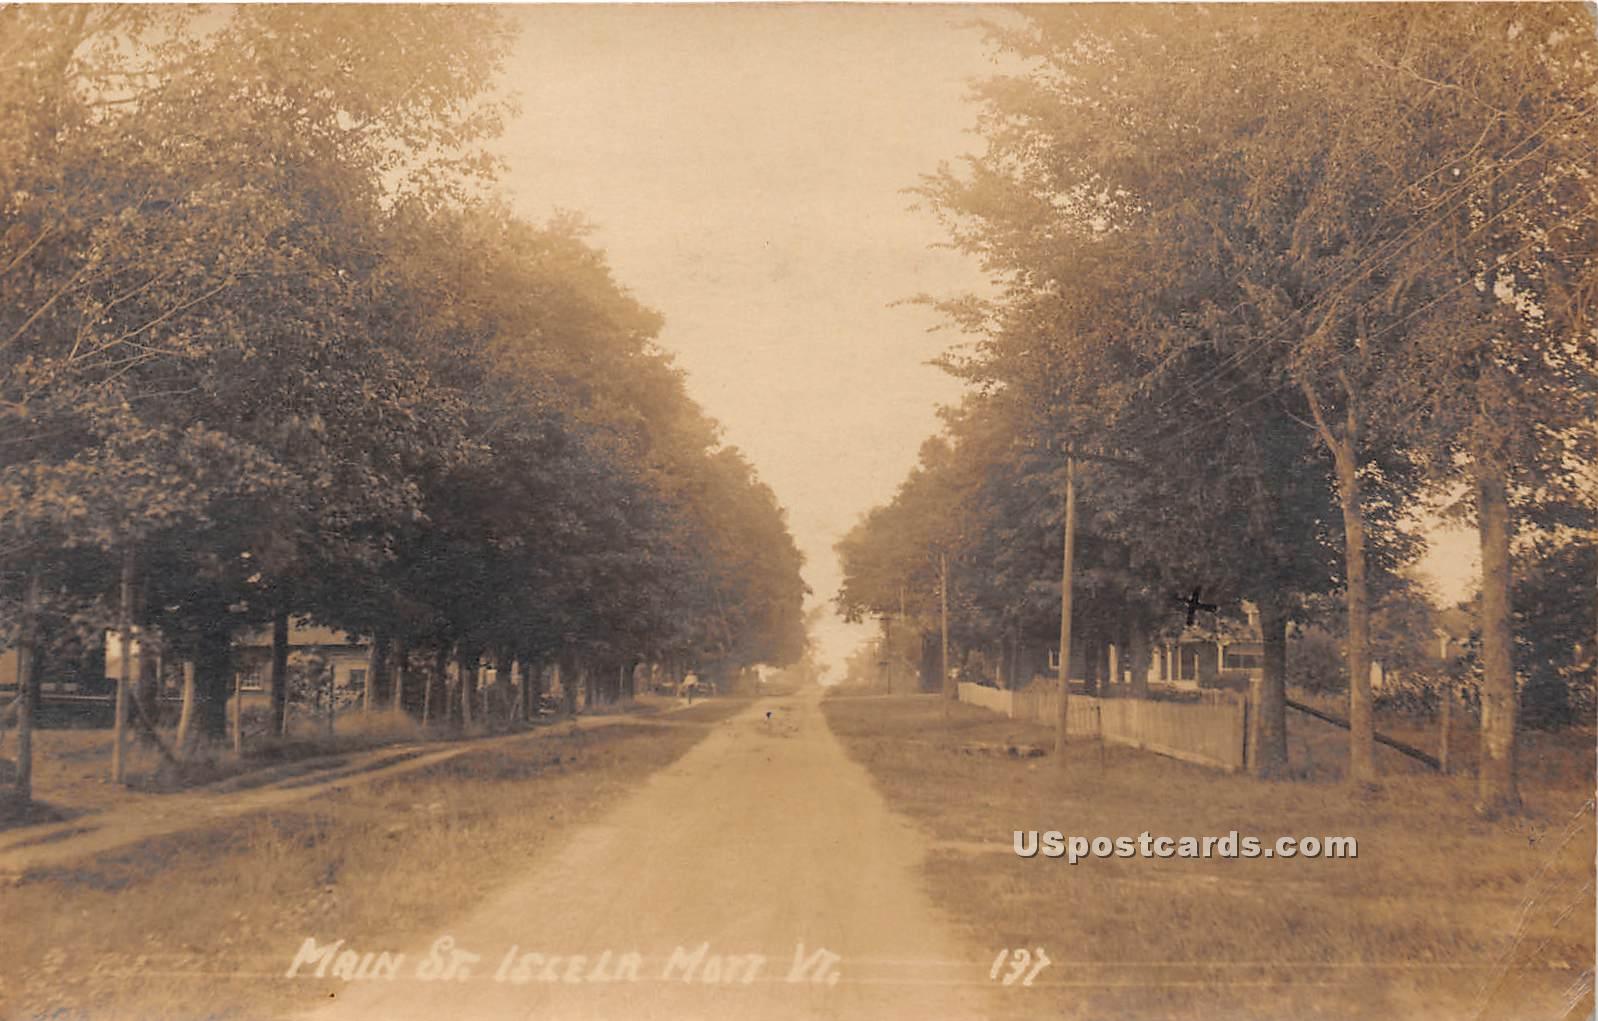 Main Street - Islela Mott, Vermont VT Postcard